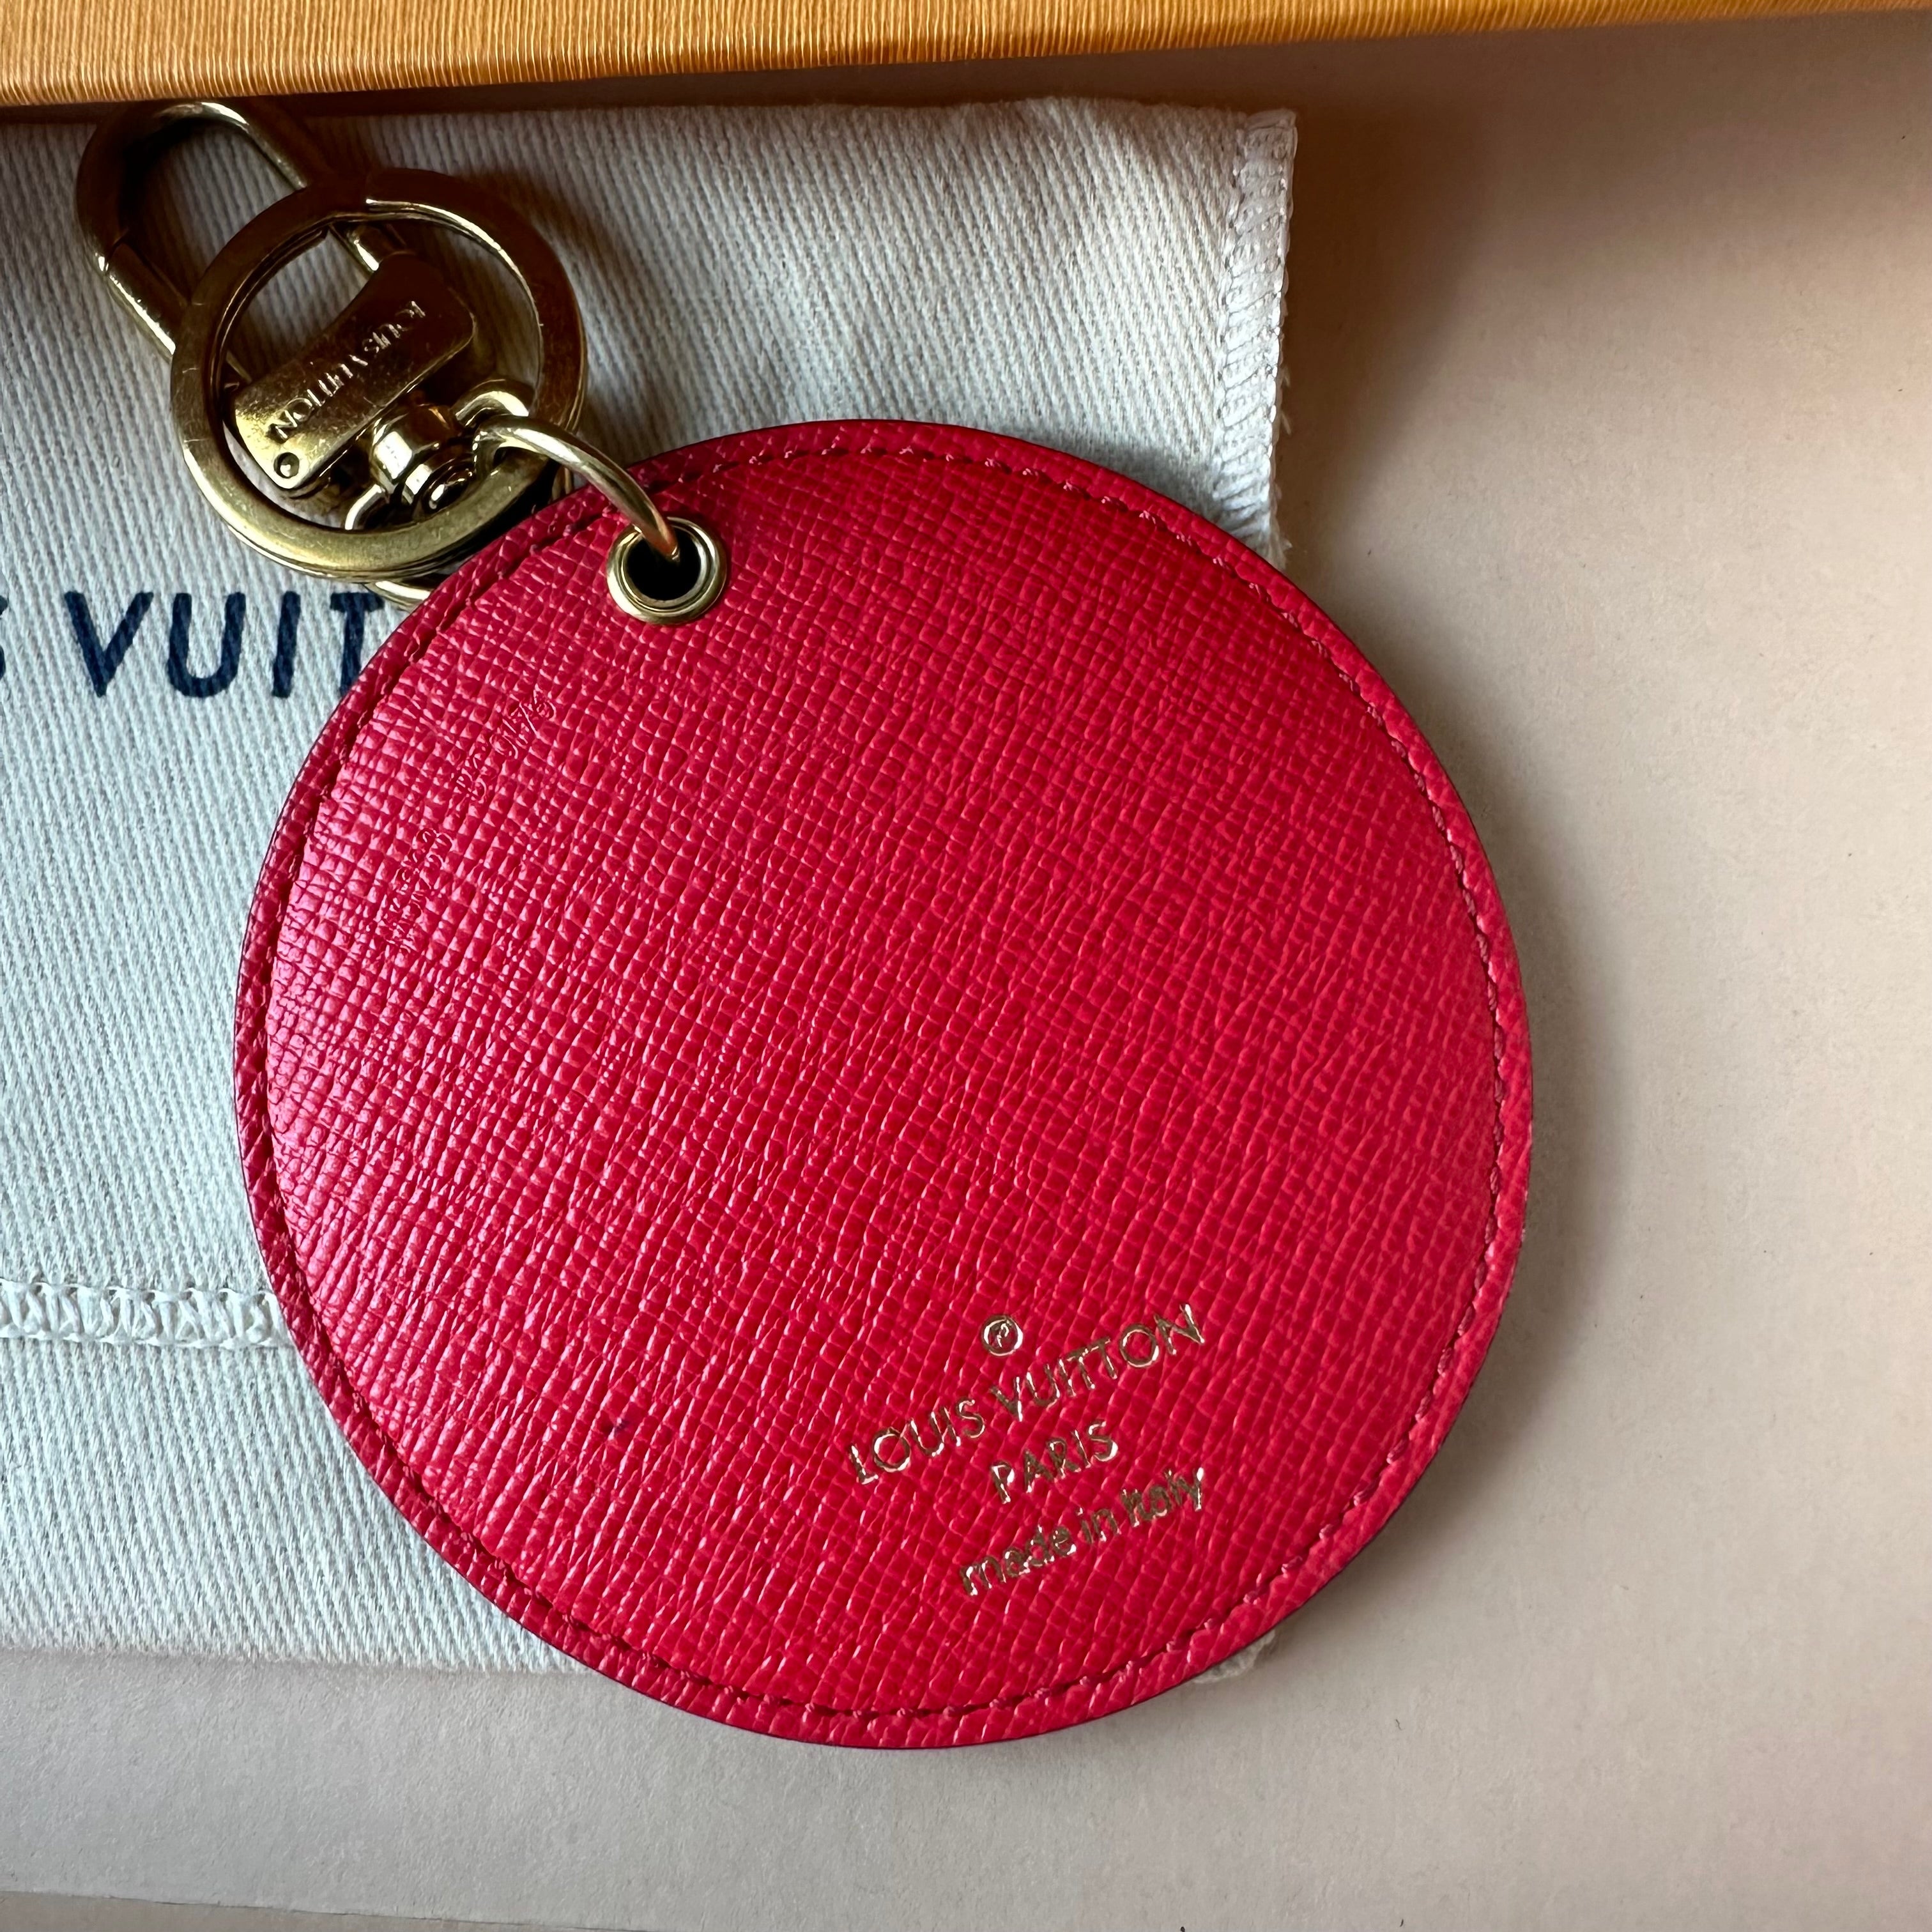 Louis Vuitton Red Monogram Illustre Multi V Bag Charm